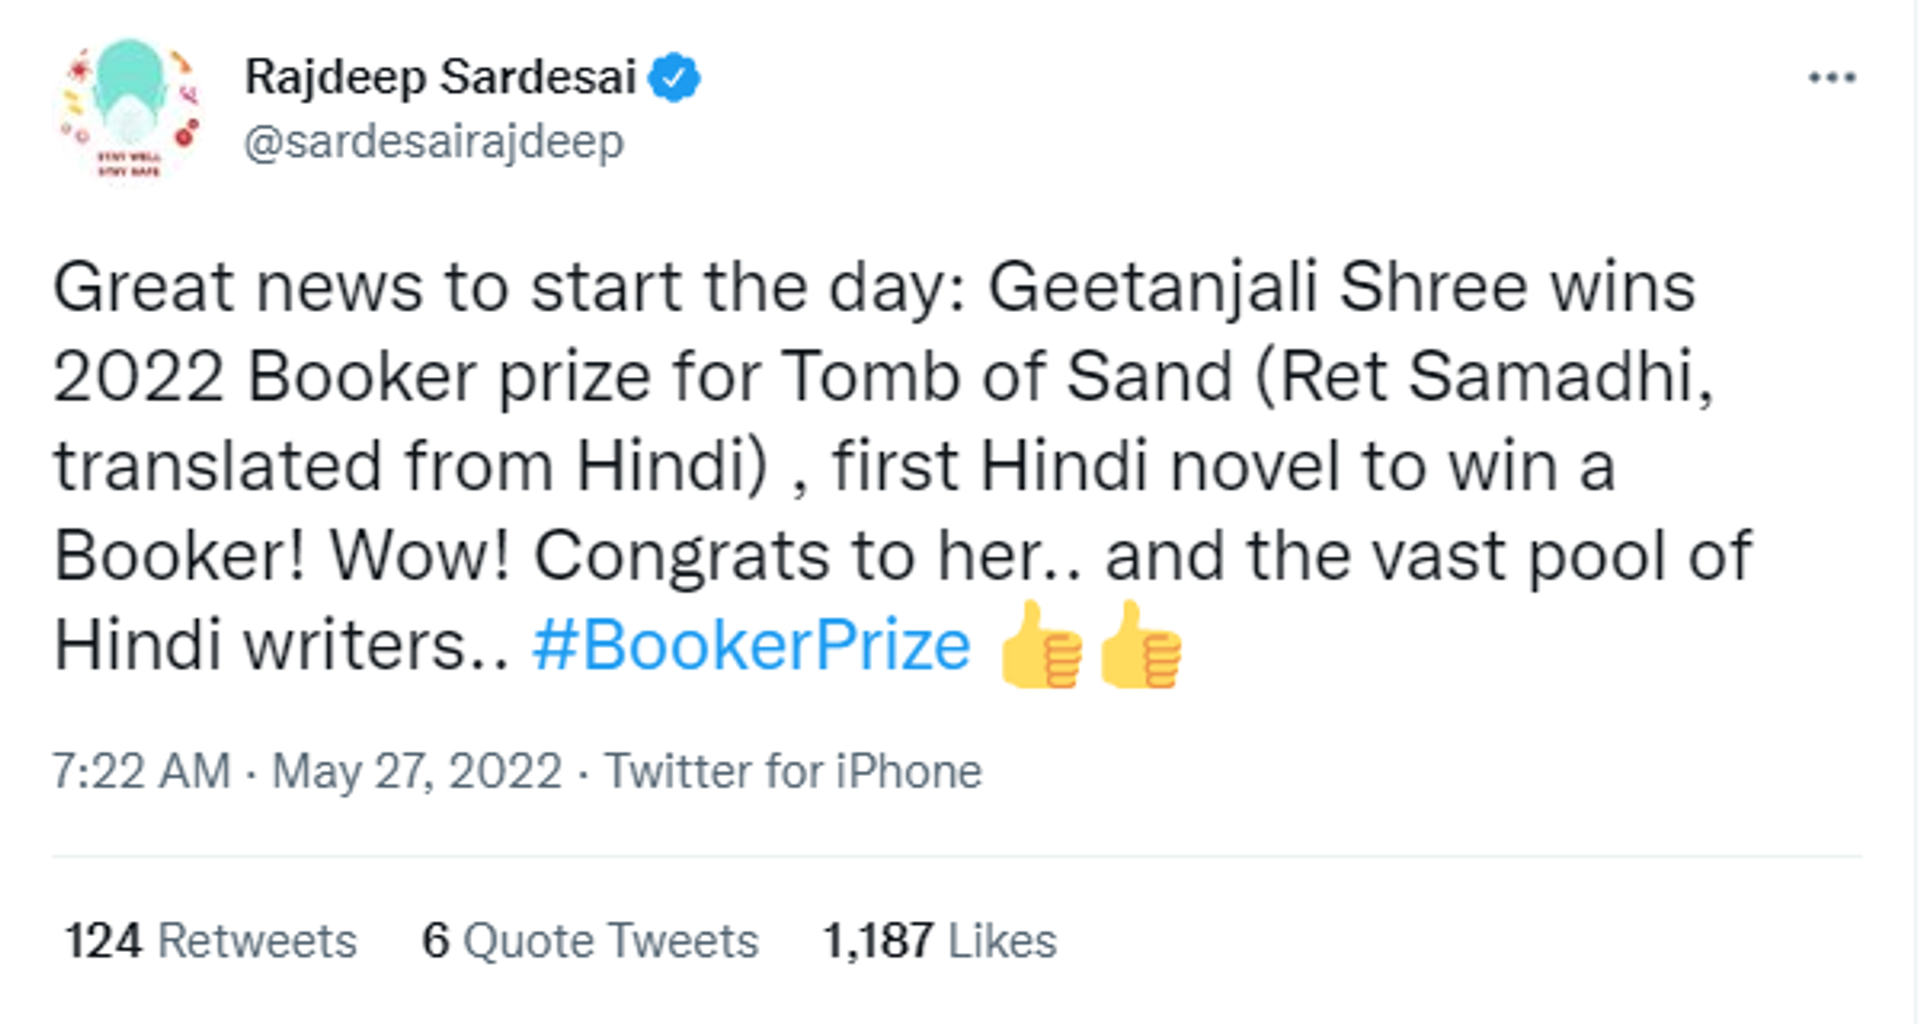 Journalist Rajdeep Sardesai Heaped Praises for Geetanjali Shree - Sputnik International, 1920, 27.05.2022